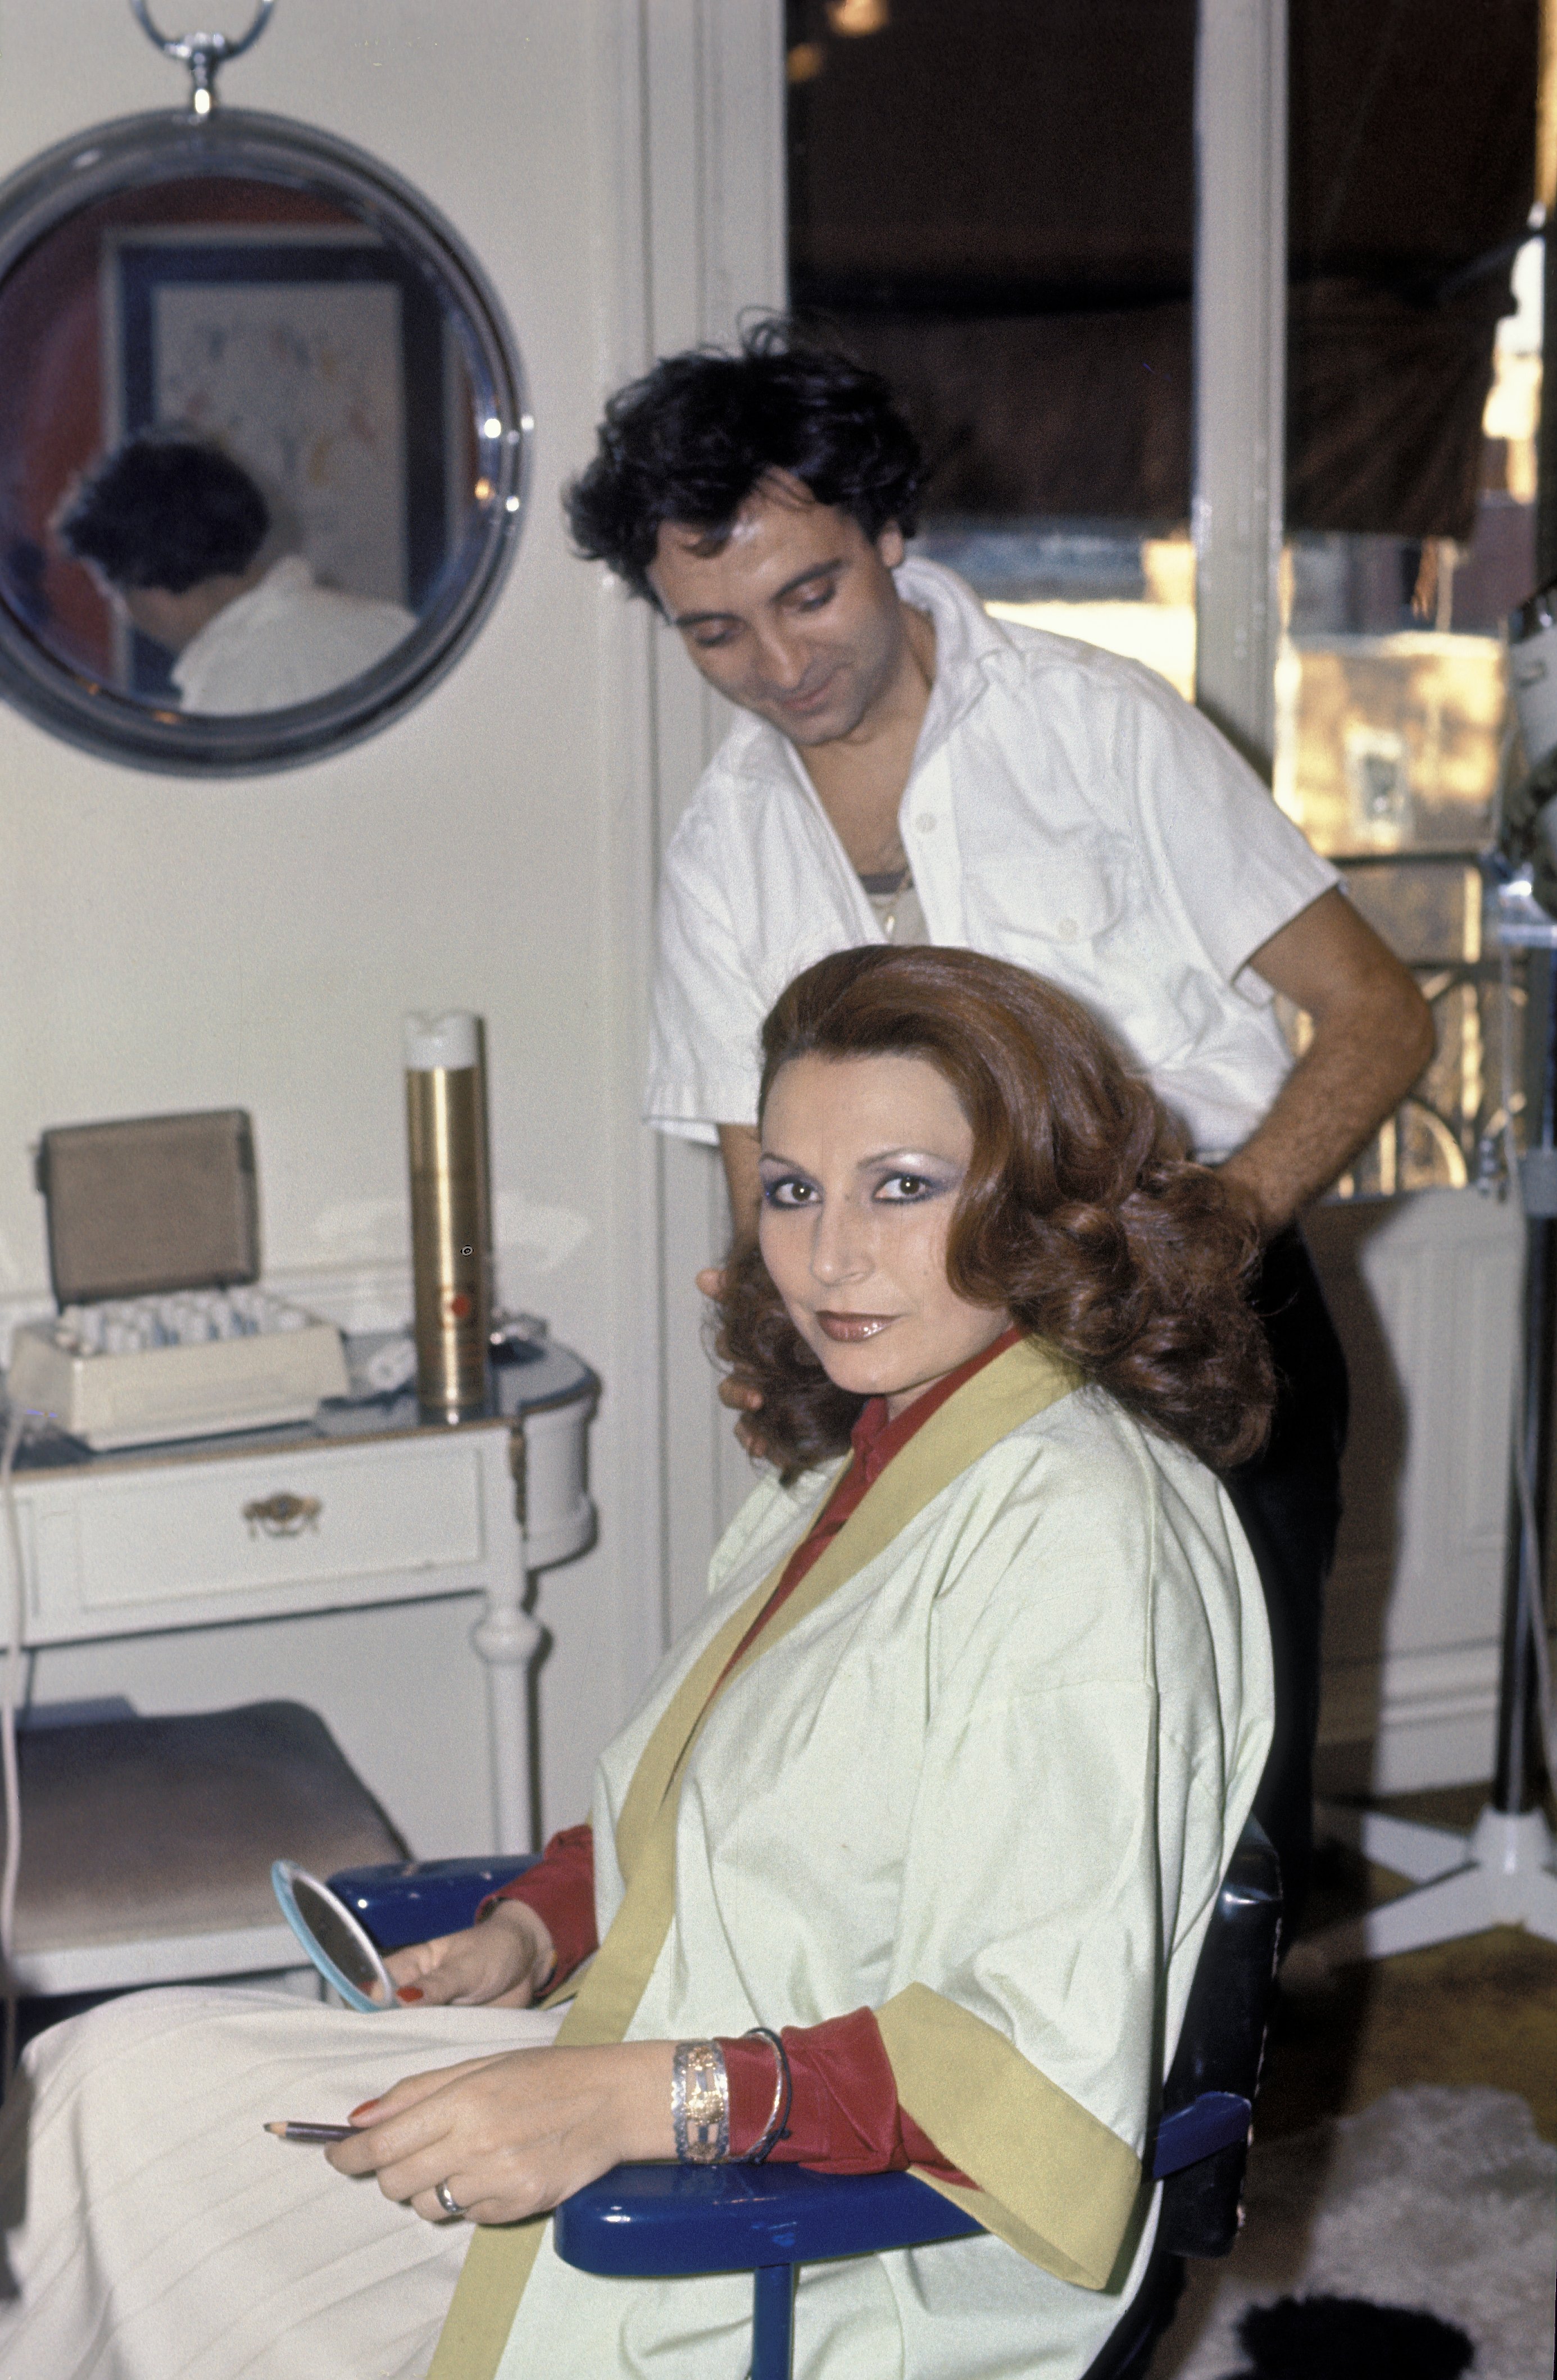  La cantante españolal Rocio Jurado con Rupert, un famoso peluquero, en 1978. | Foto: Getty Images